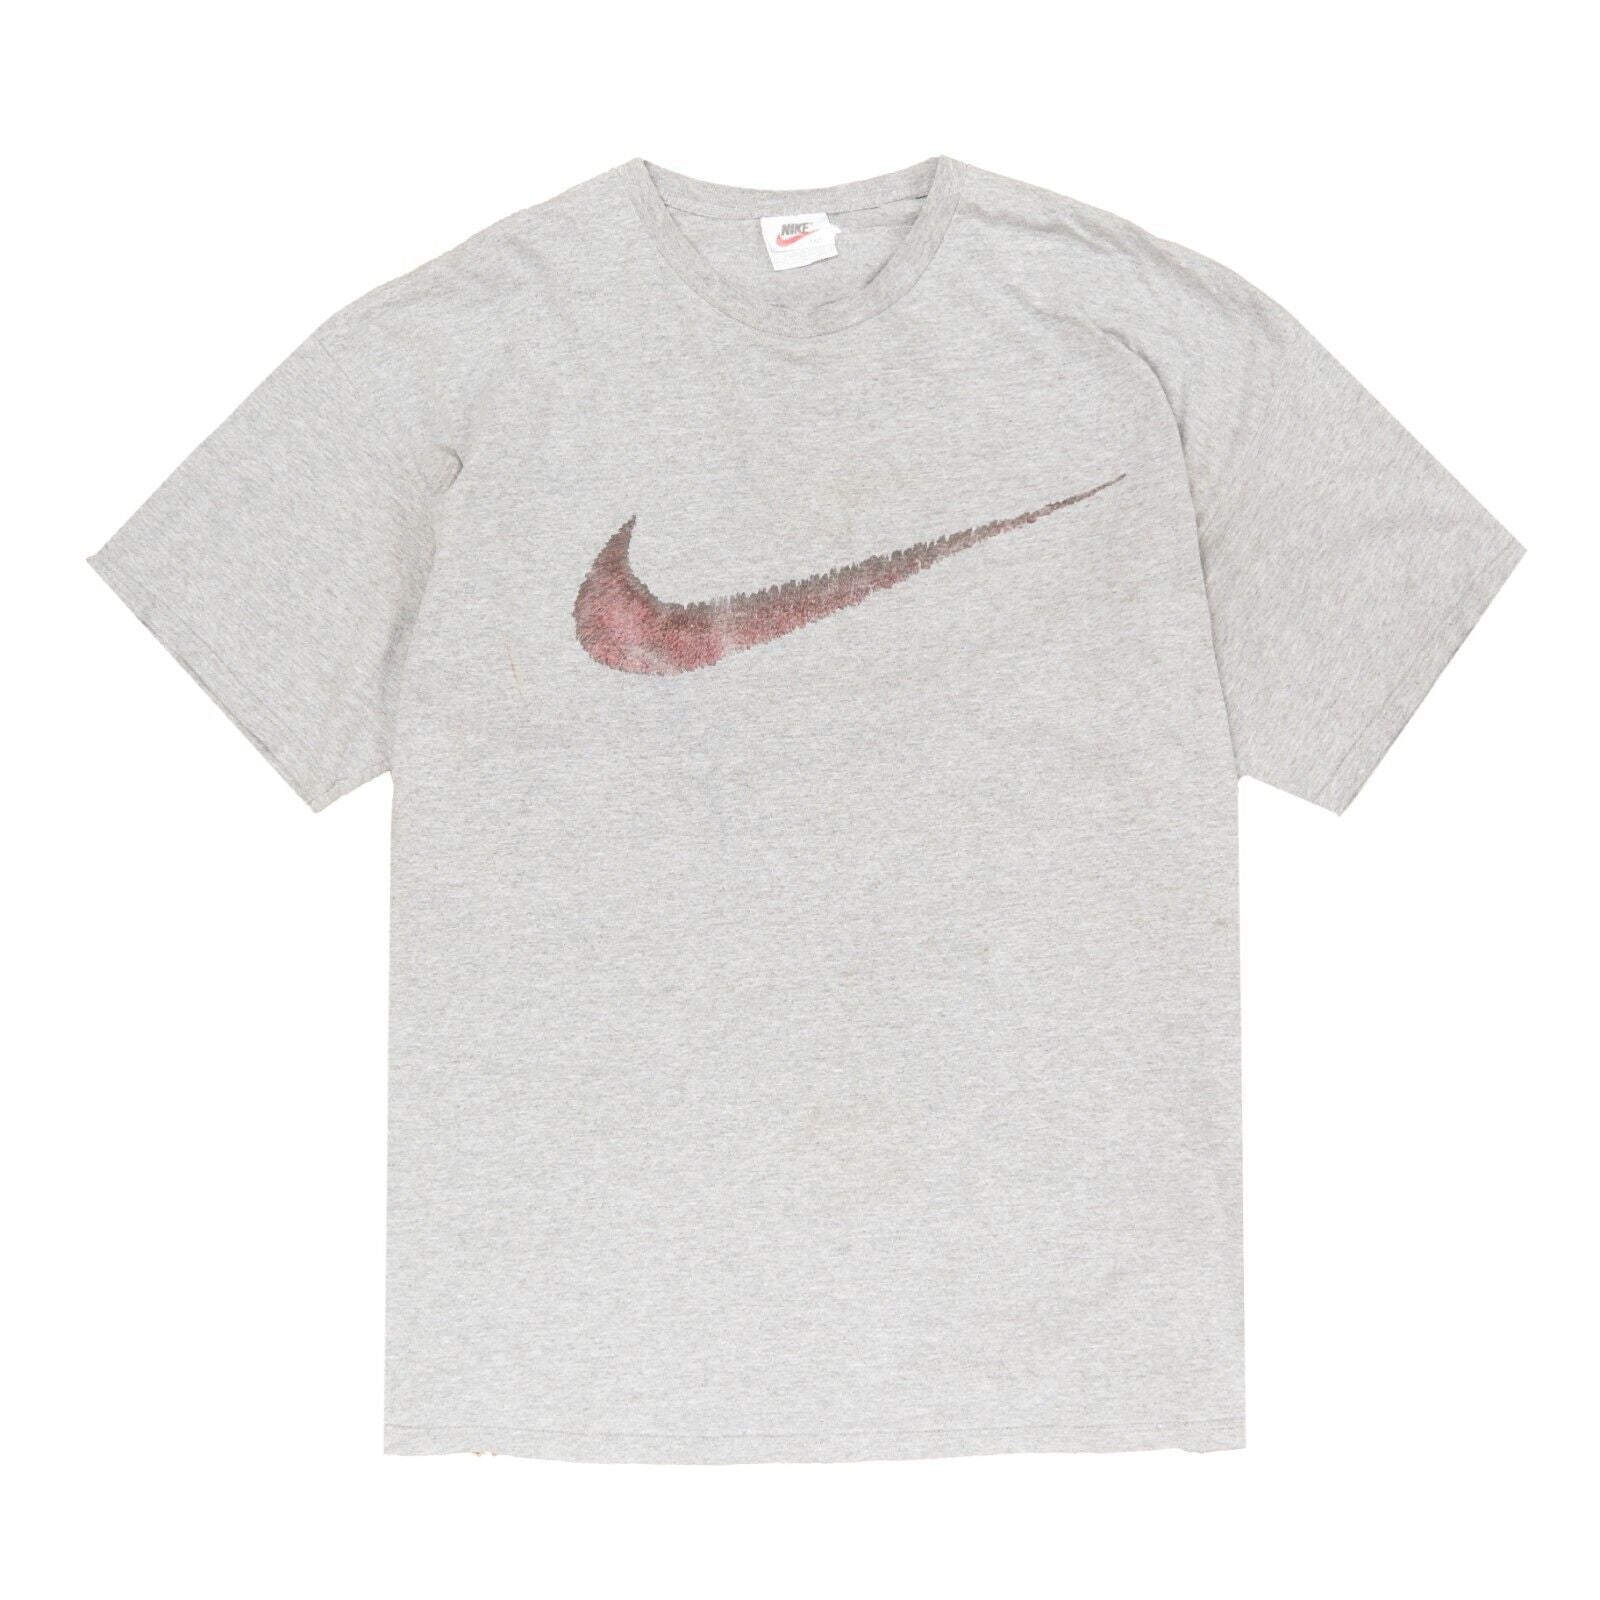 Vintage Nike Big Swoosh T-Shirt Size 2XL Tall Gray Tag 90s